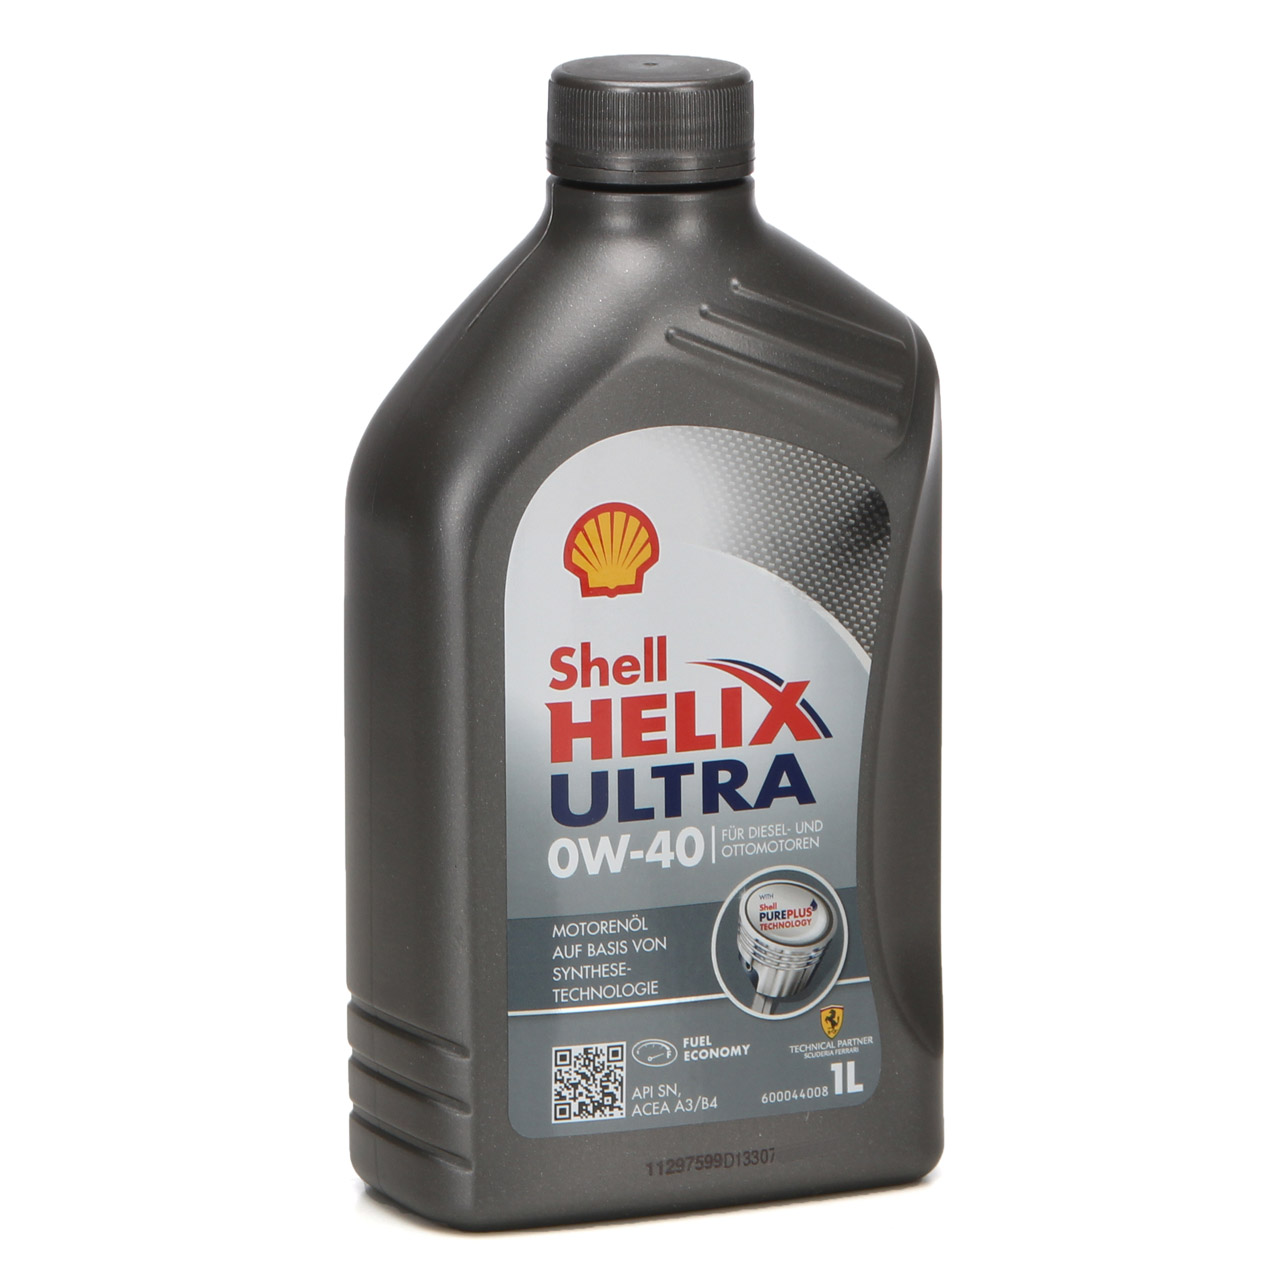 6L 6 Liter SHELL HELIX ULTRA 0W-40 Motoröl Öl MB 229.5/226.5 VW 502.00/505.00